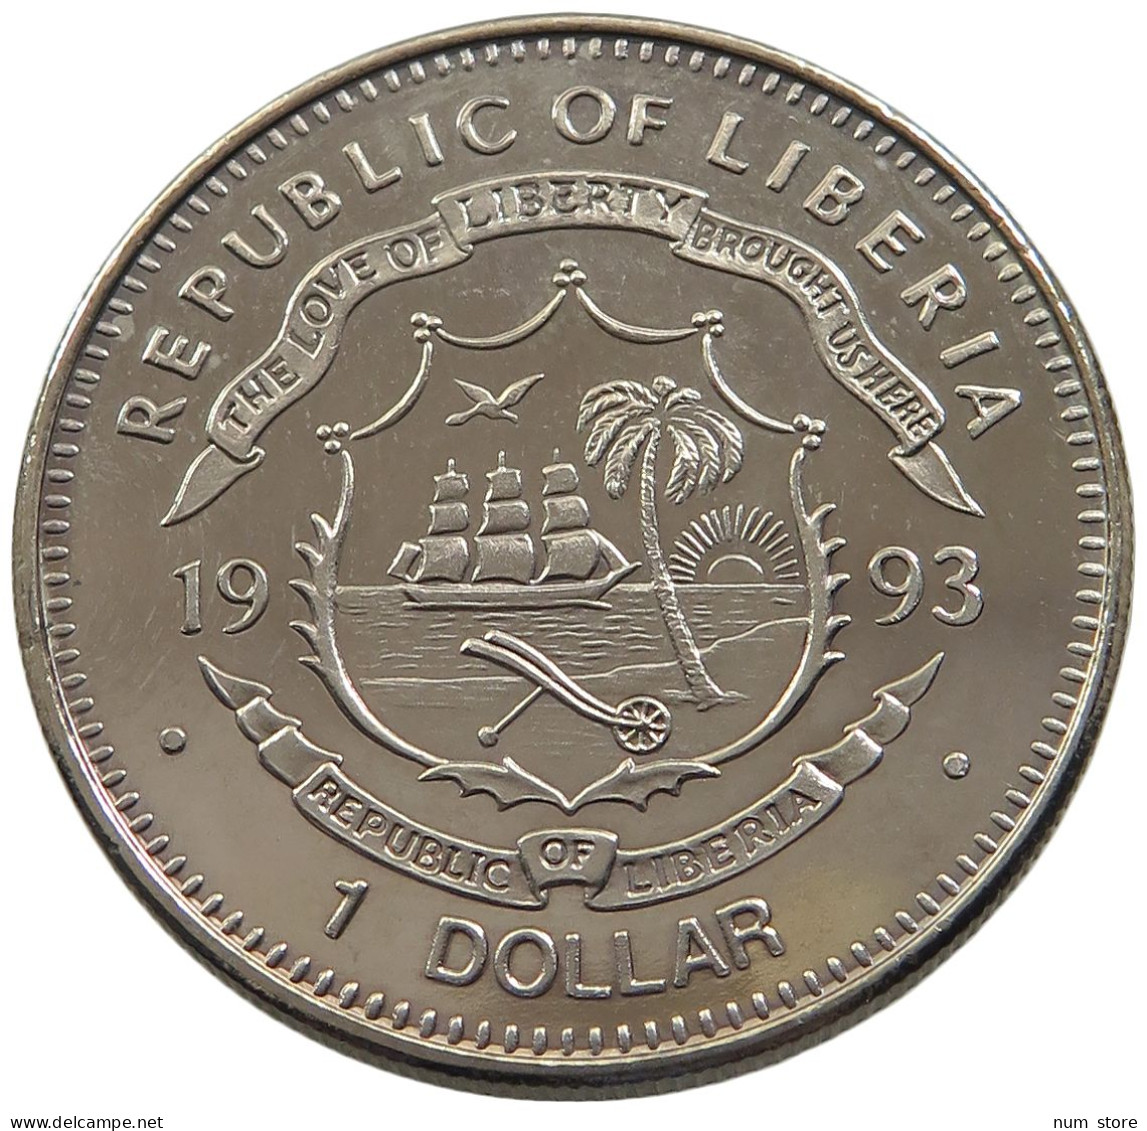 LIBERIA DOLLAR 1993 ATCHAEOPTERYX UNC #sm14 1053 - Liberia